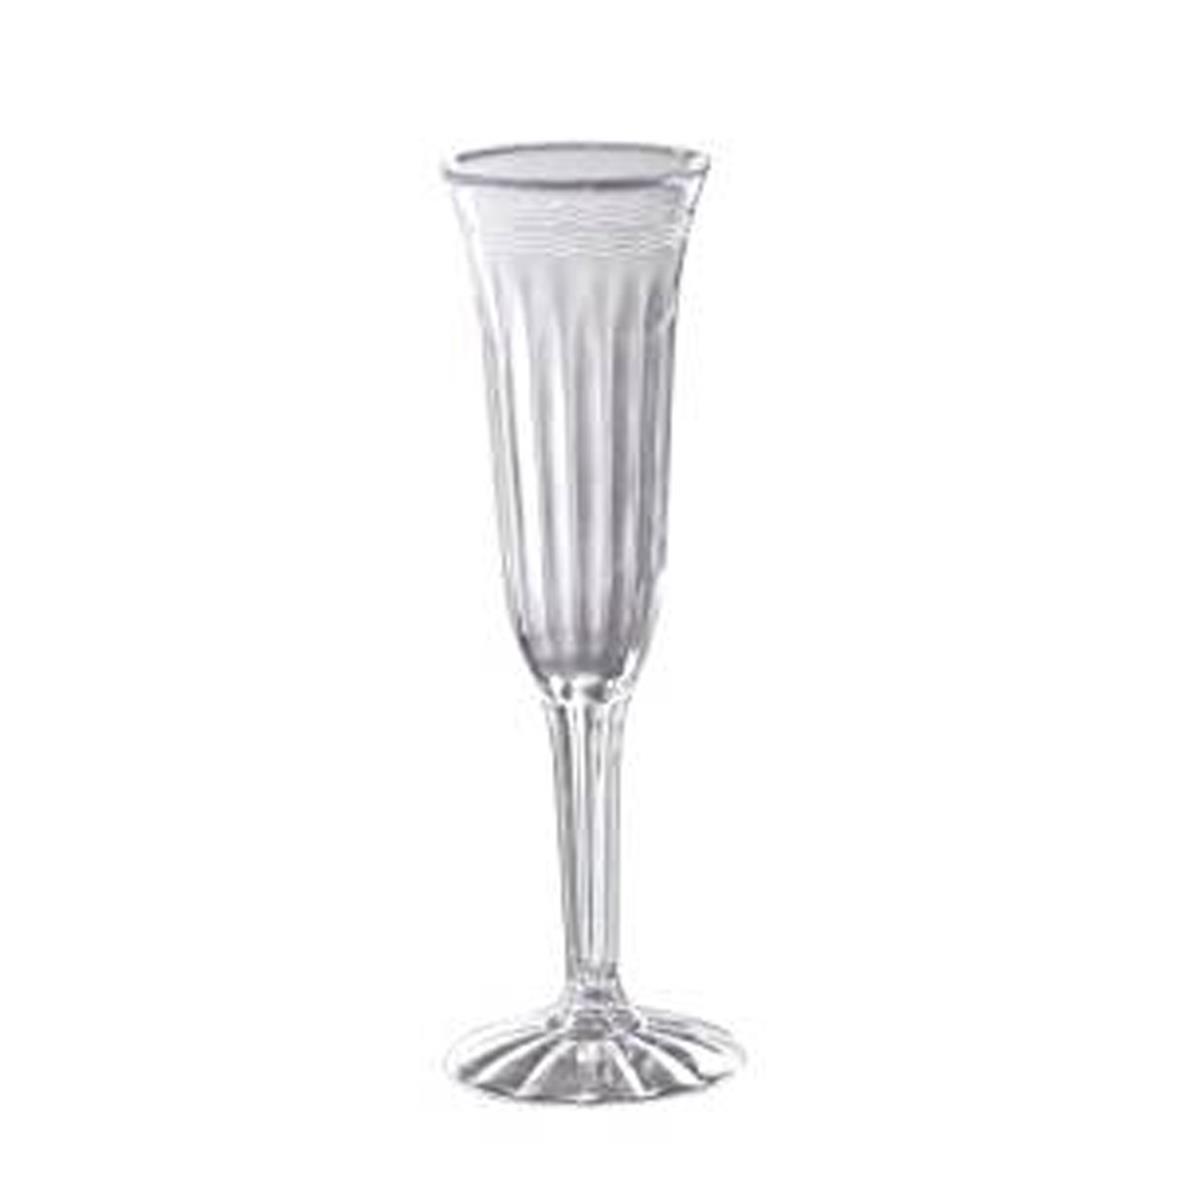 Emi-refc1p5 Pec 5 Oz Fluted Champagne Glass, Clear